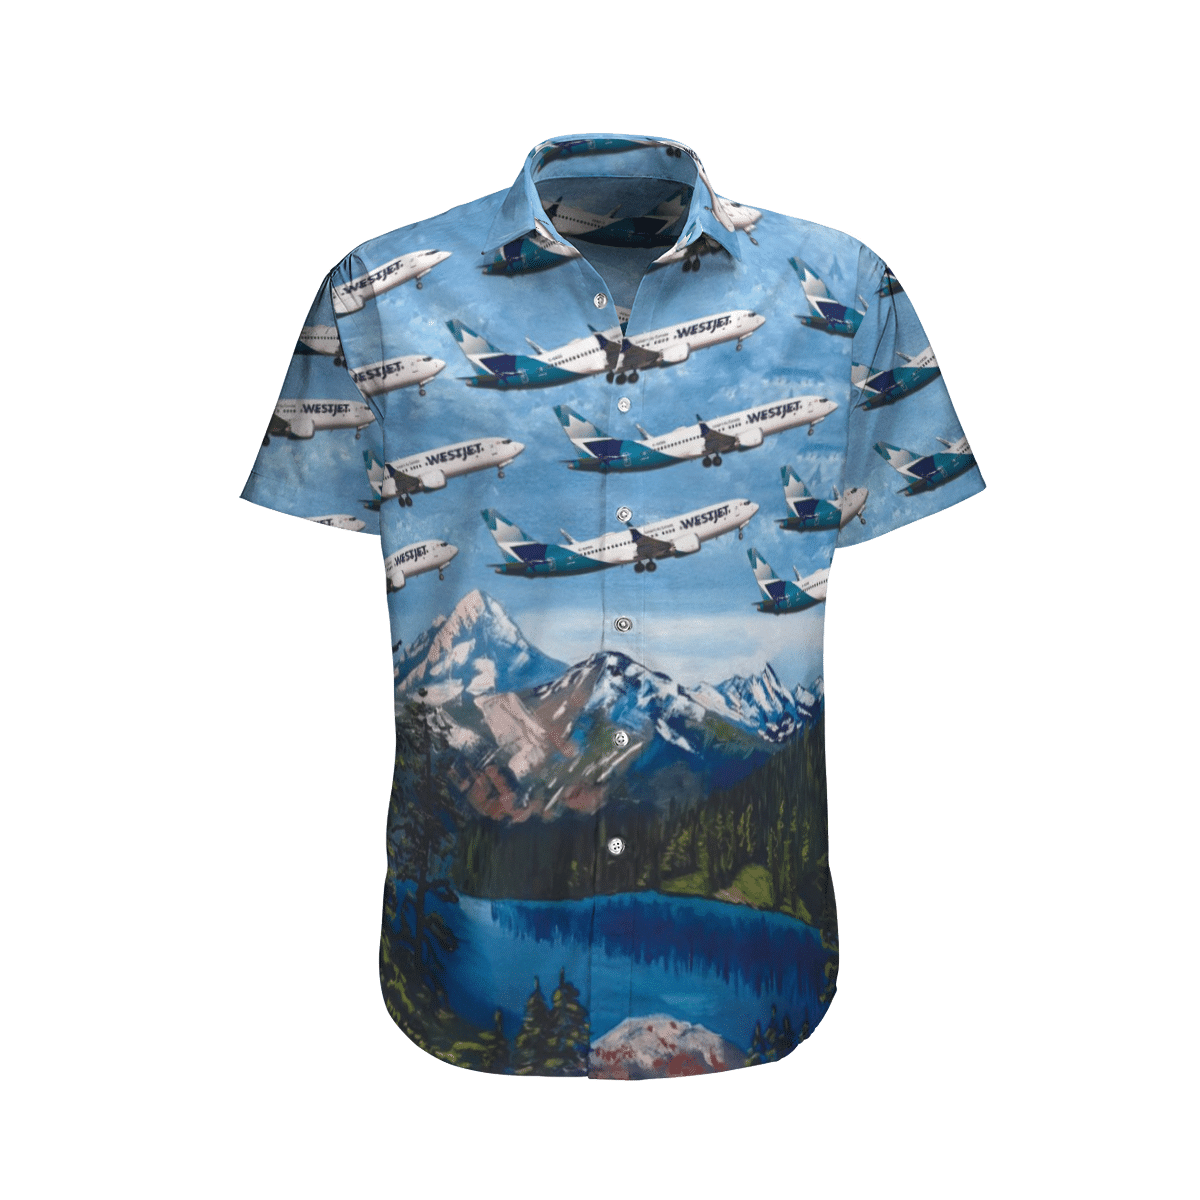 Enjoy your summer with top cool hawaiian shirt below 28